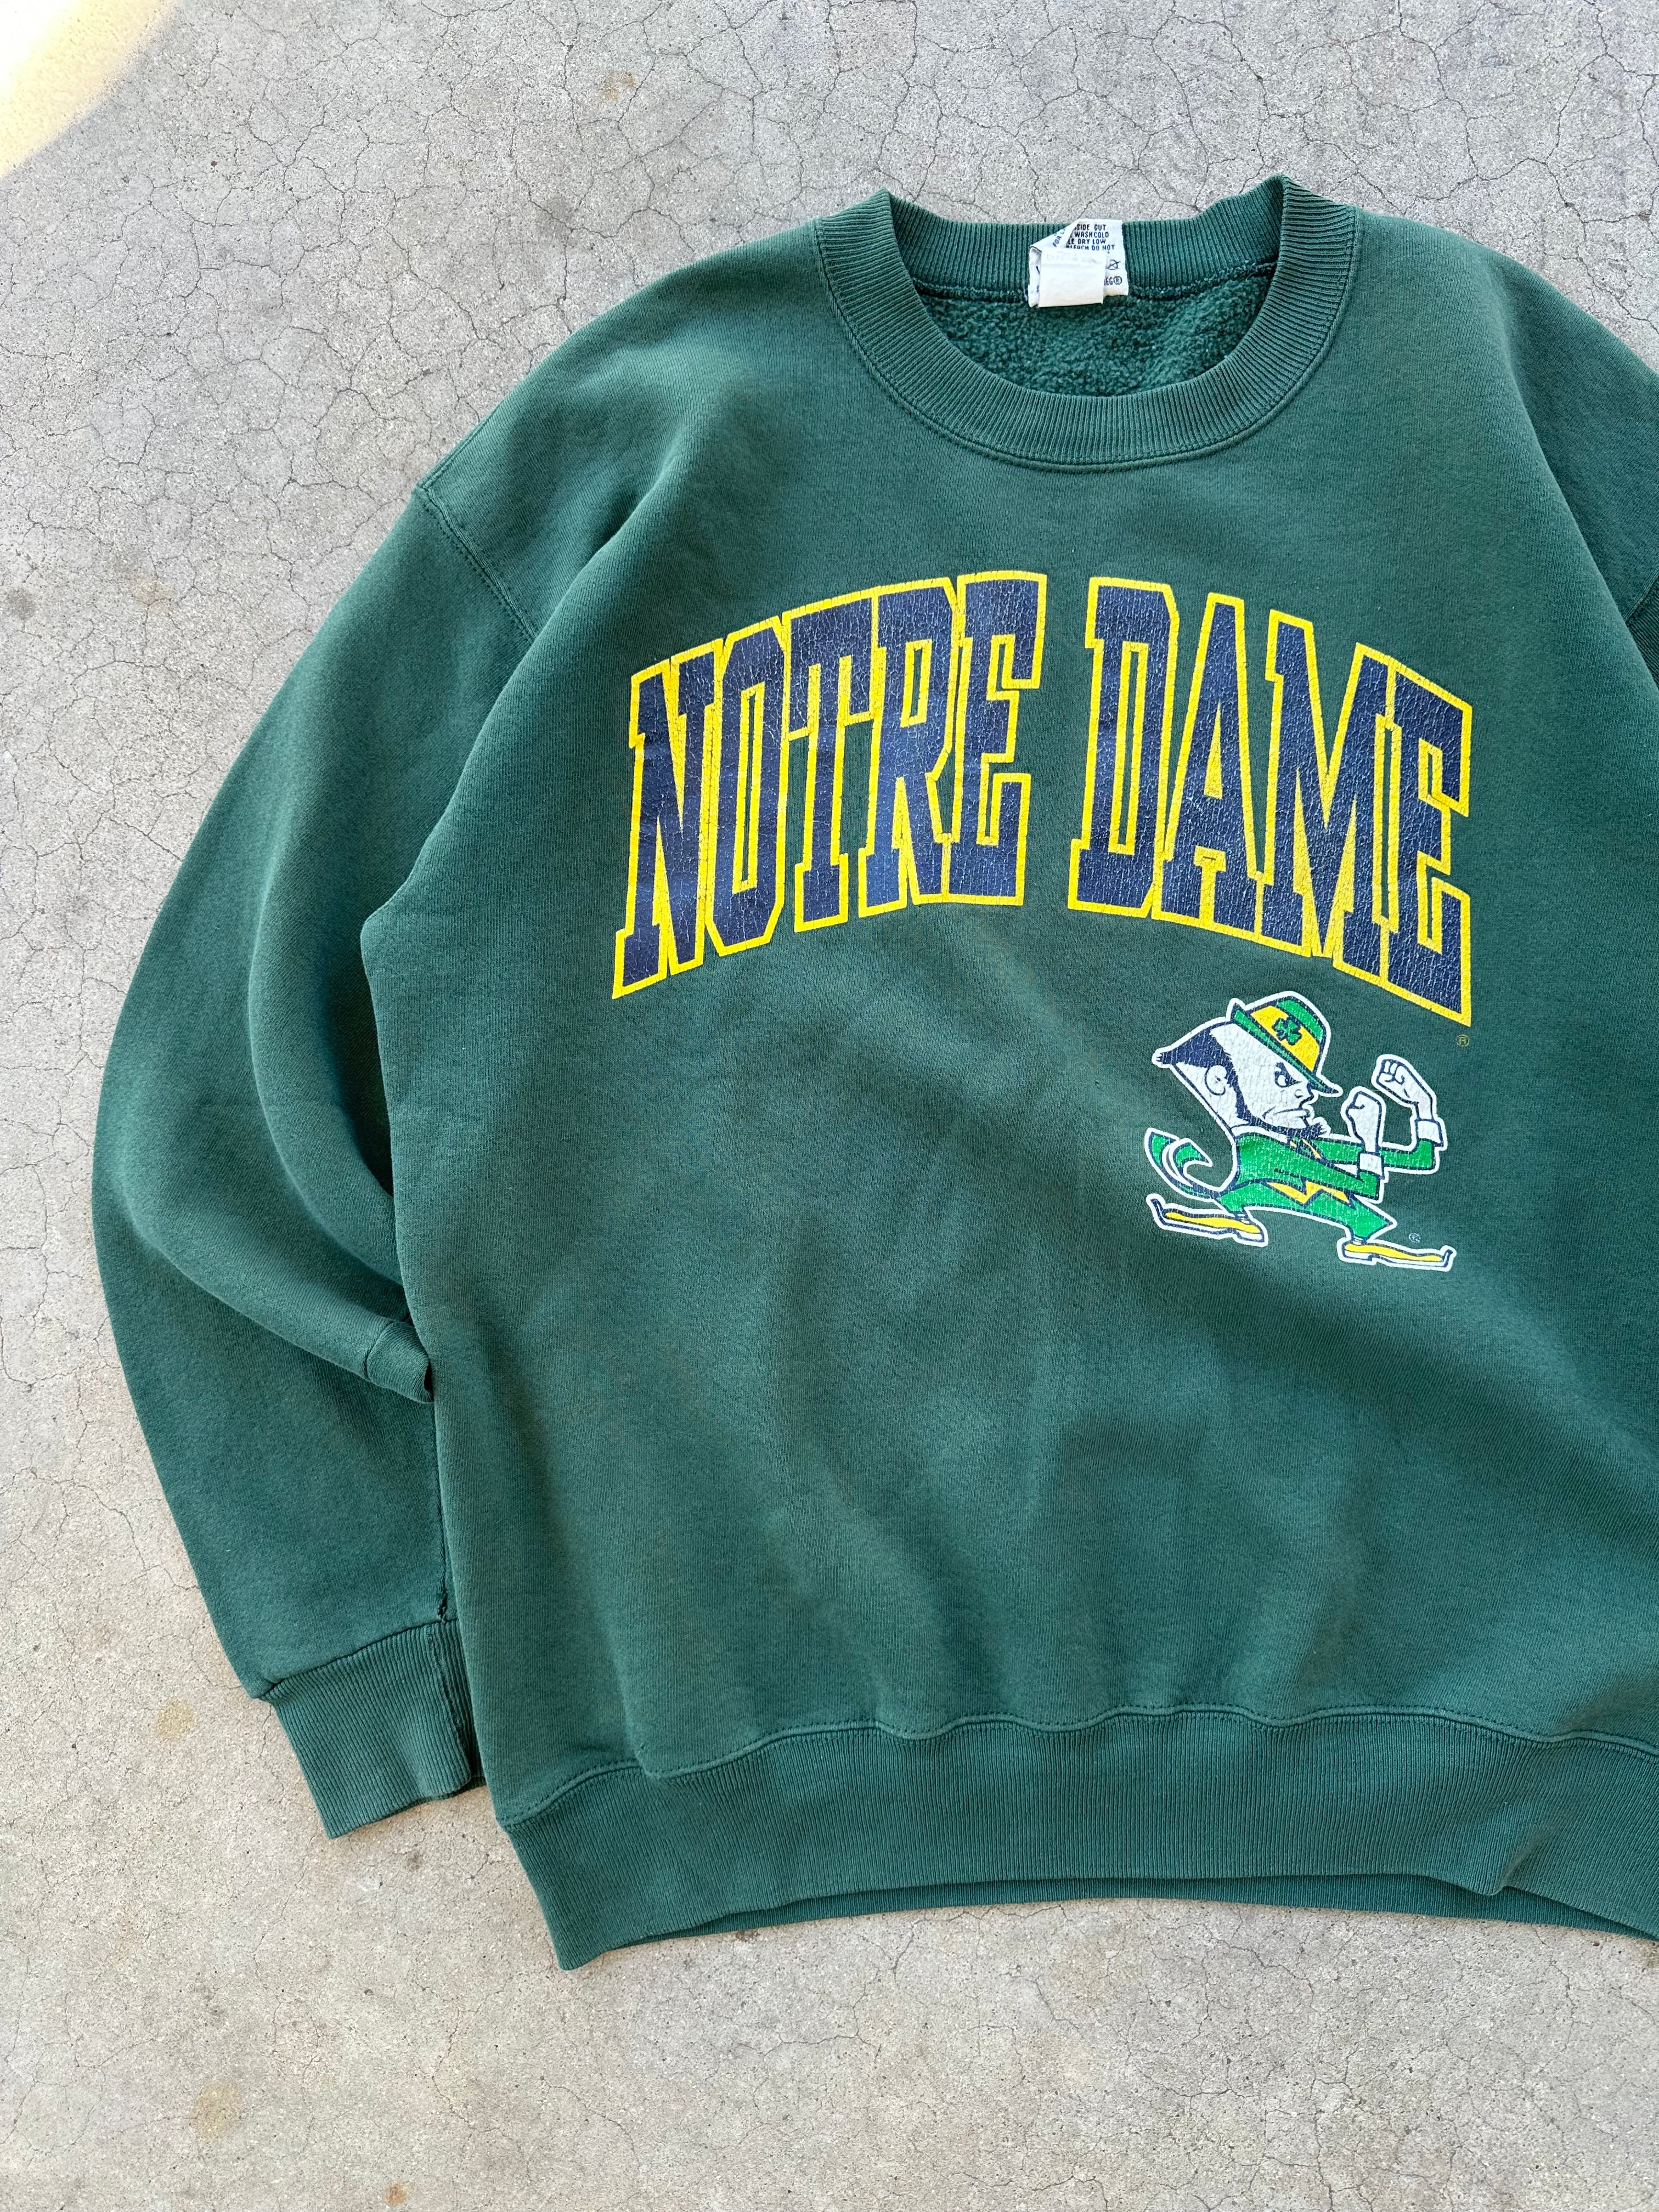 1990s Notre Dame Crewneck (L/XL)